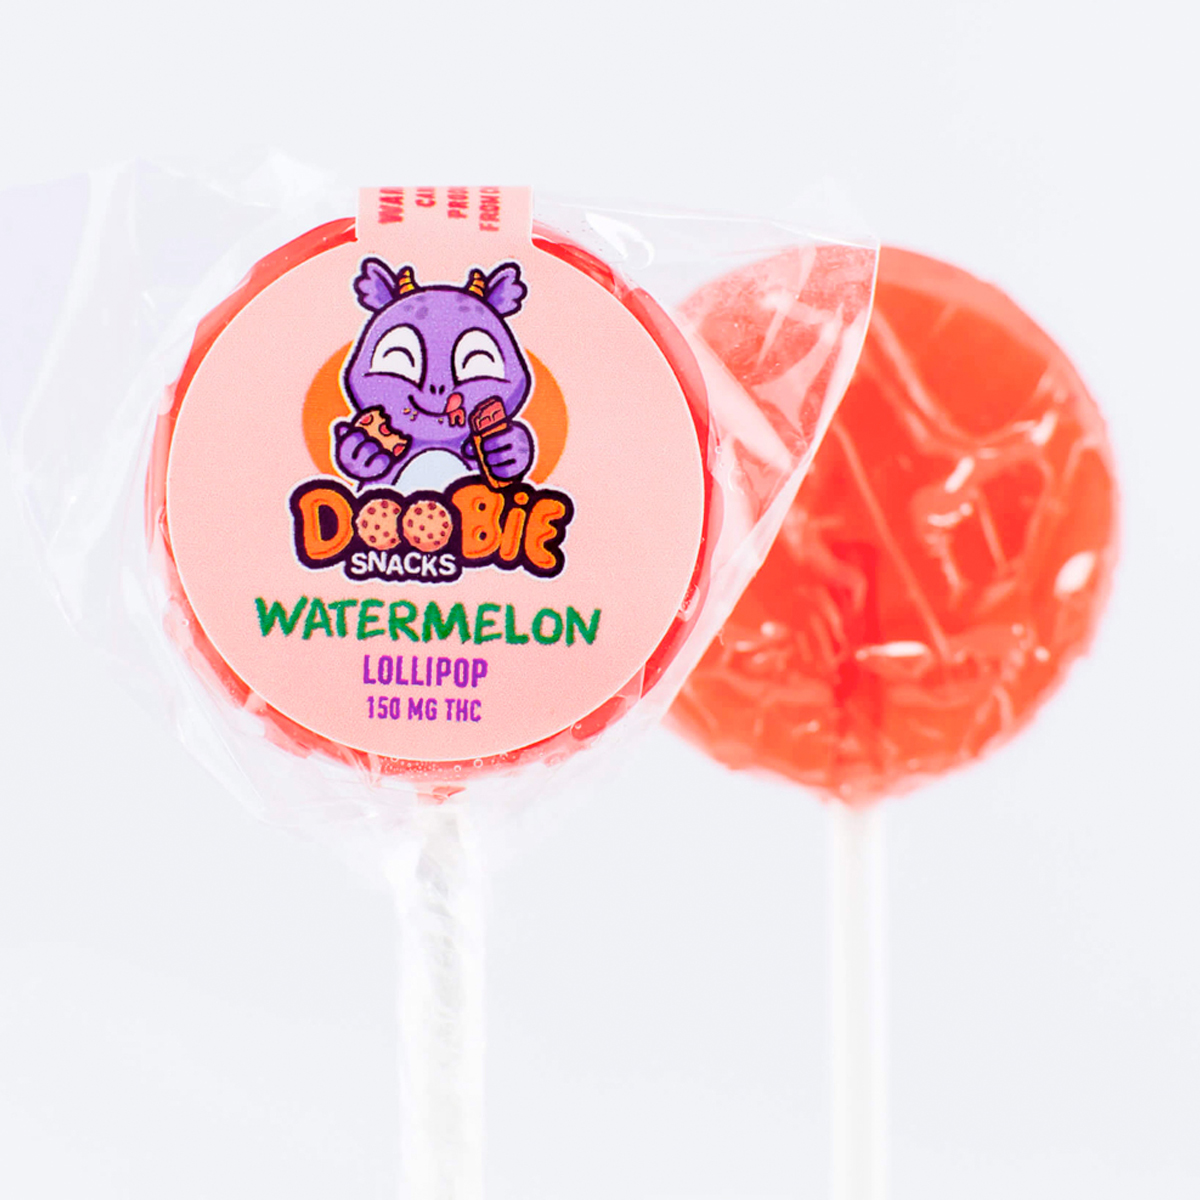 Watermelon Lollipops 150MG THC by Doobie Snacks